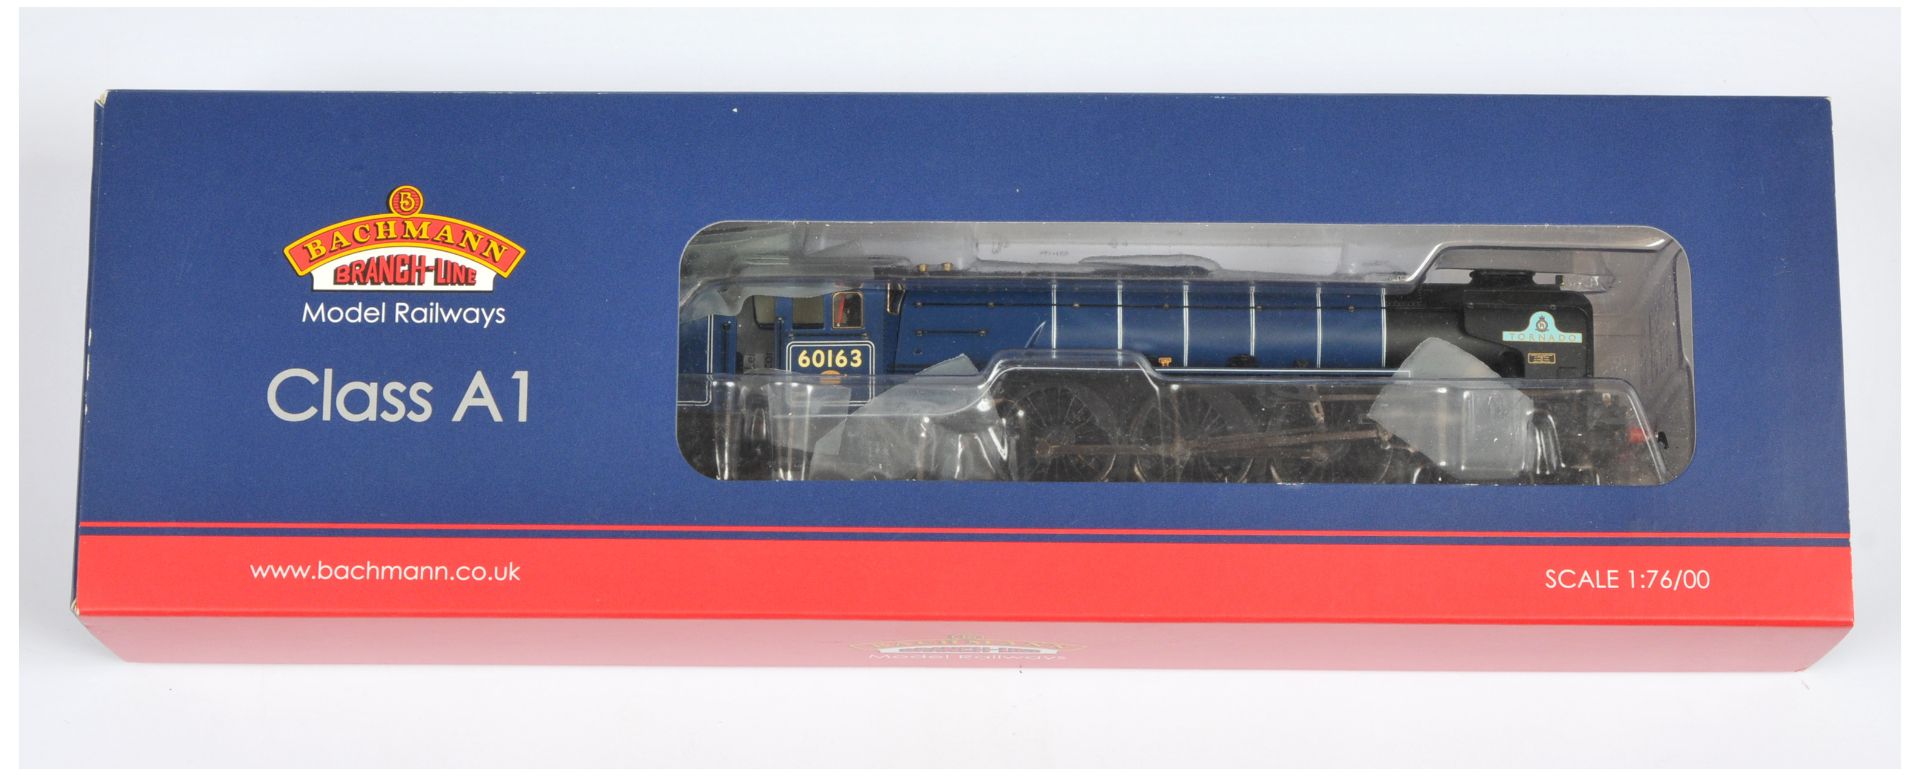 Bachmann OO Gauge 32-550C 4-6-2 BR A1 Class Steam Locomotive No. 60163 "Tornado" in BR blue